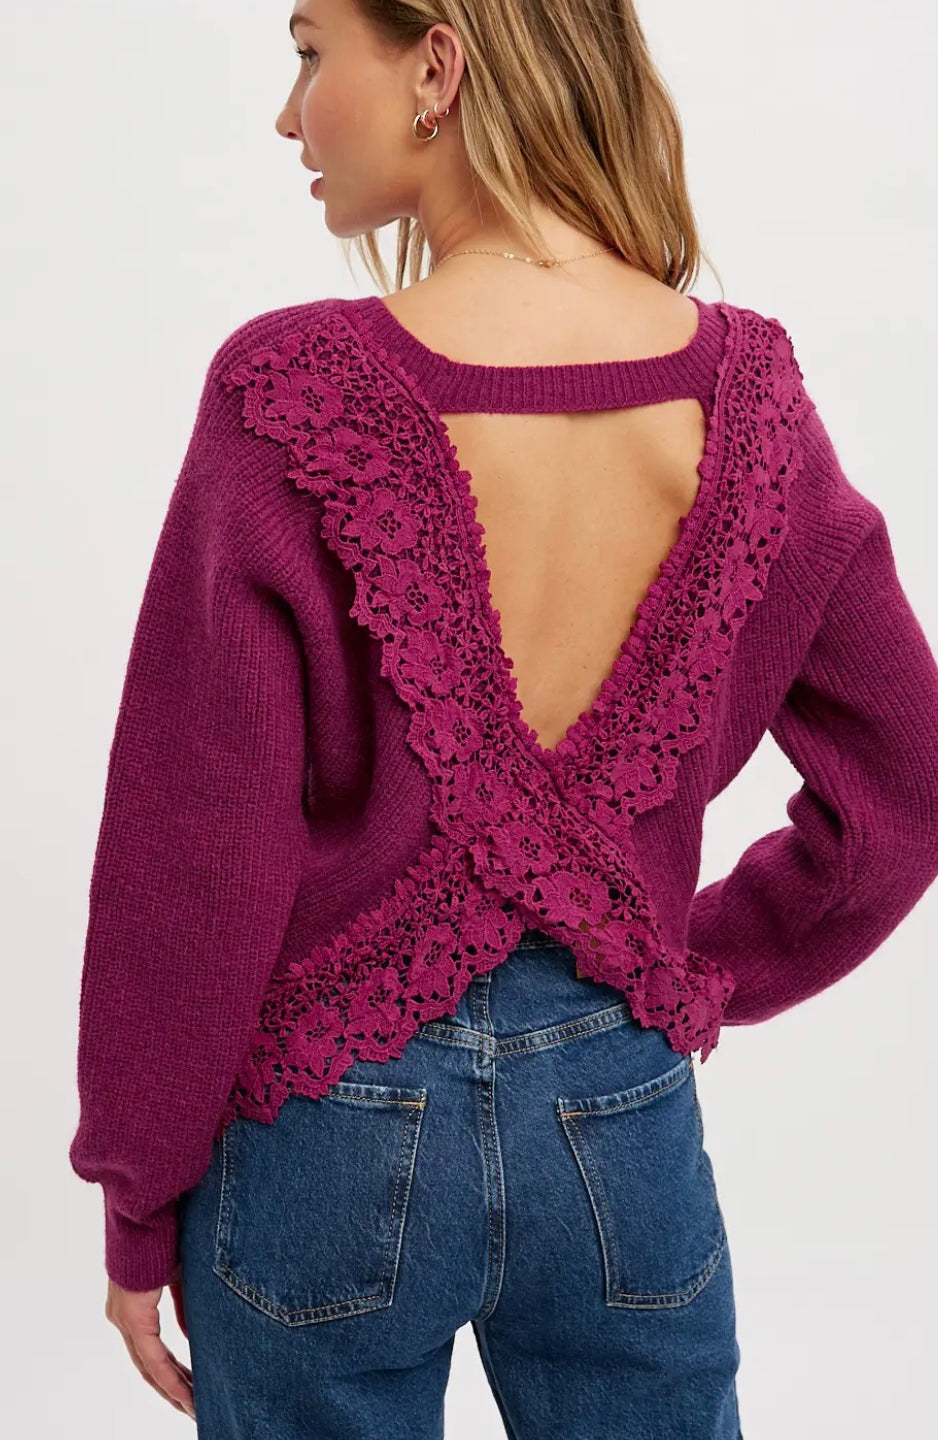 Crochet Lace Magenta Cross Back